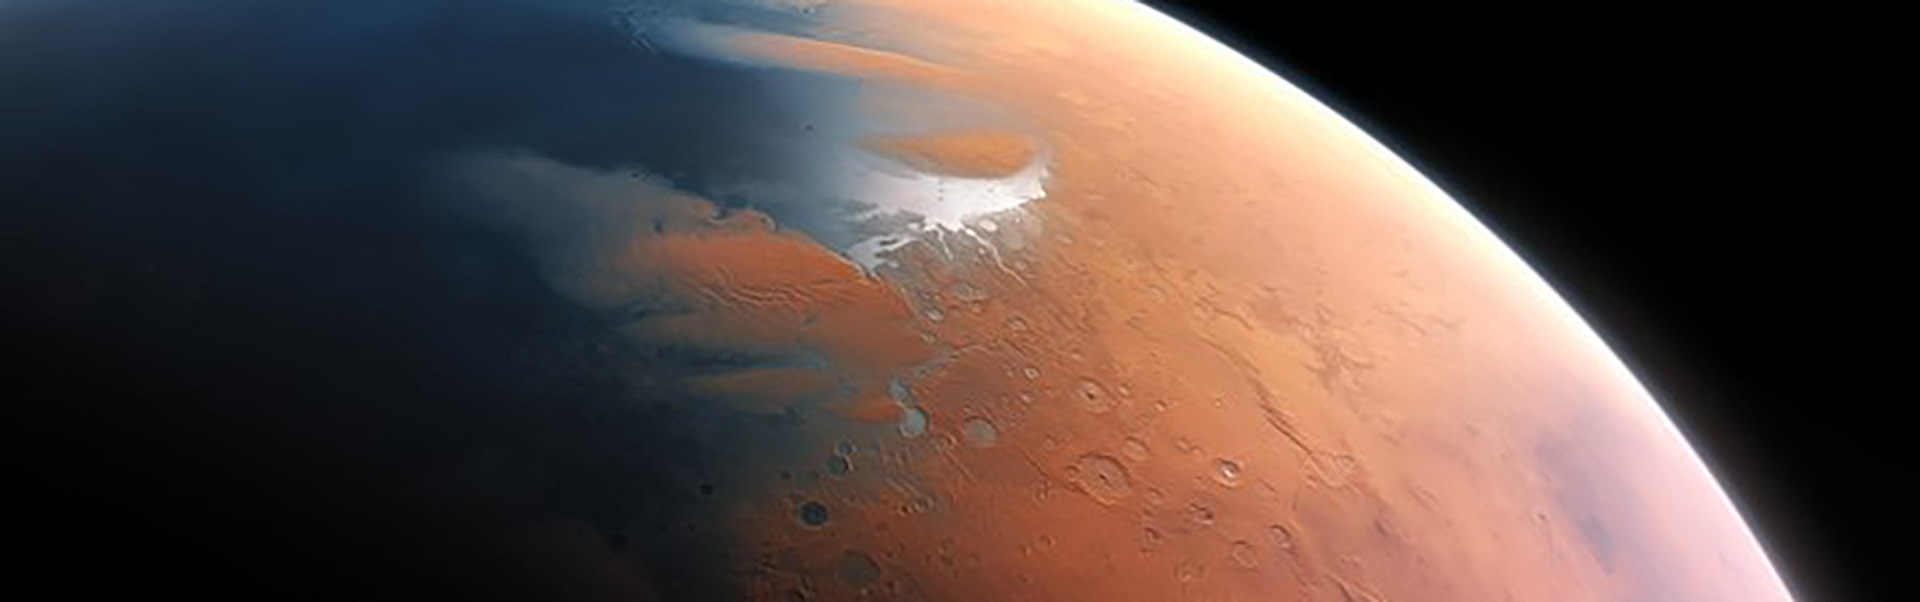 Marte el planeta rojo